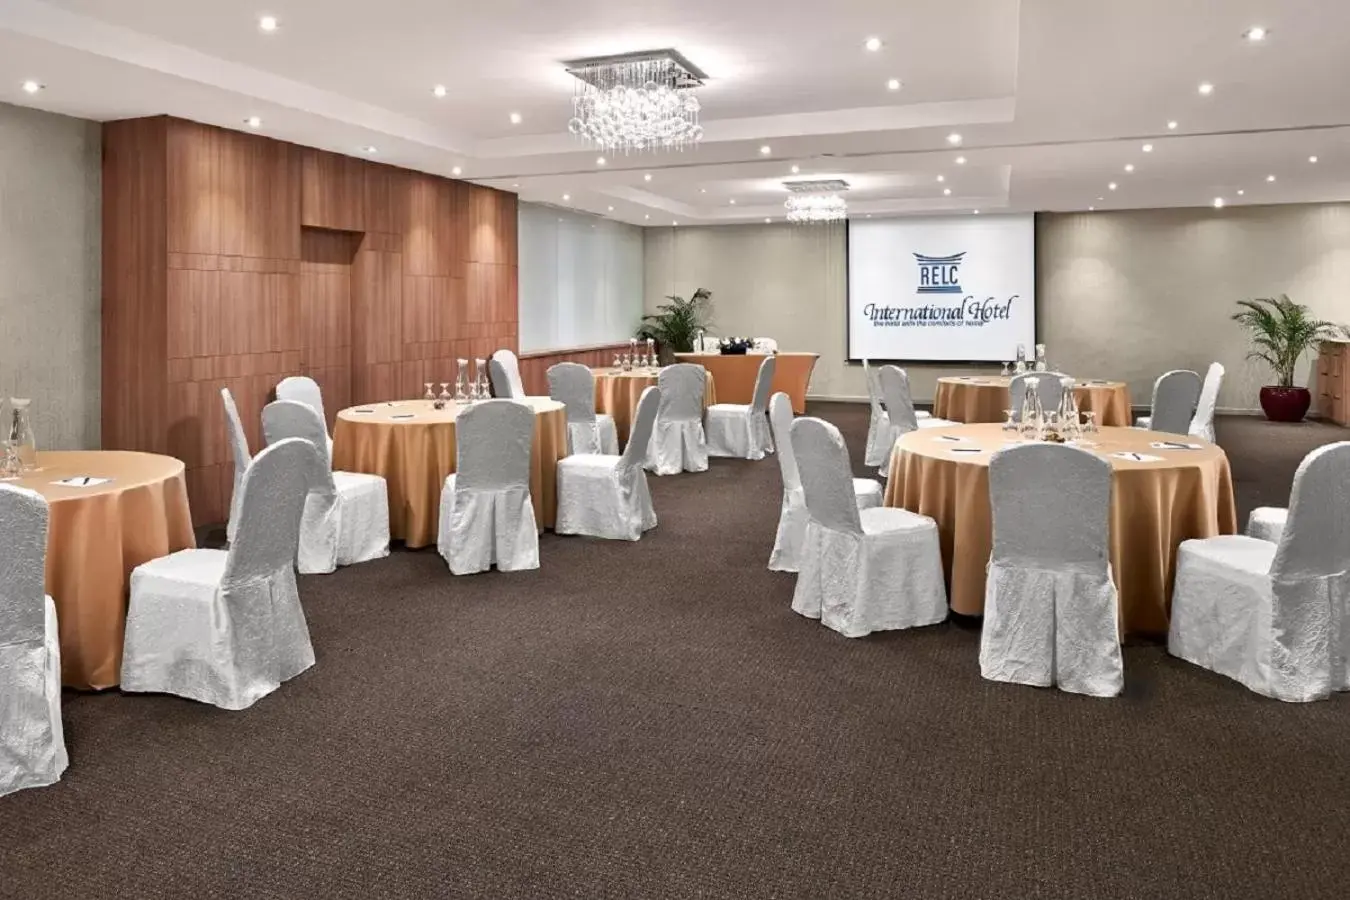 Banquet Facilities in RELC International Hotel